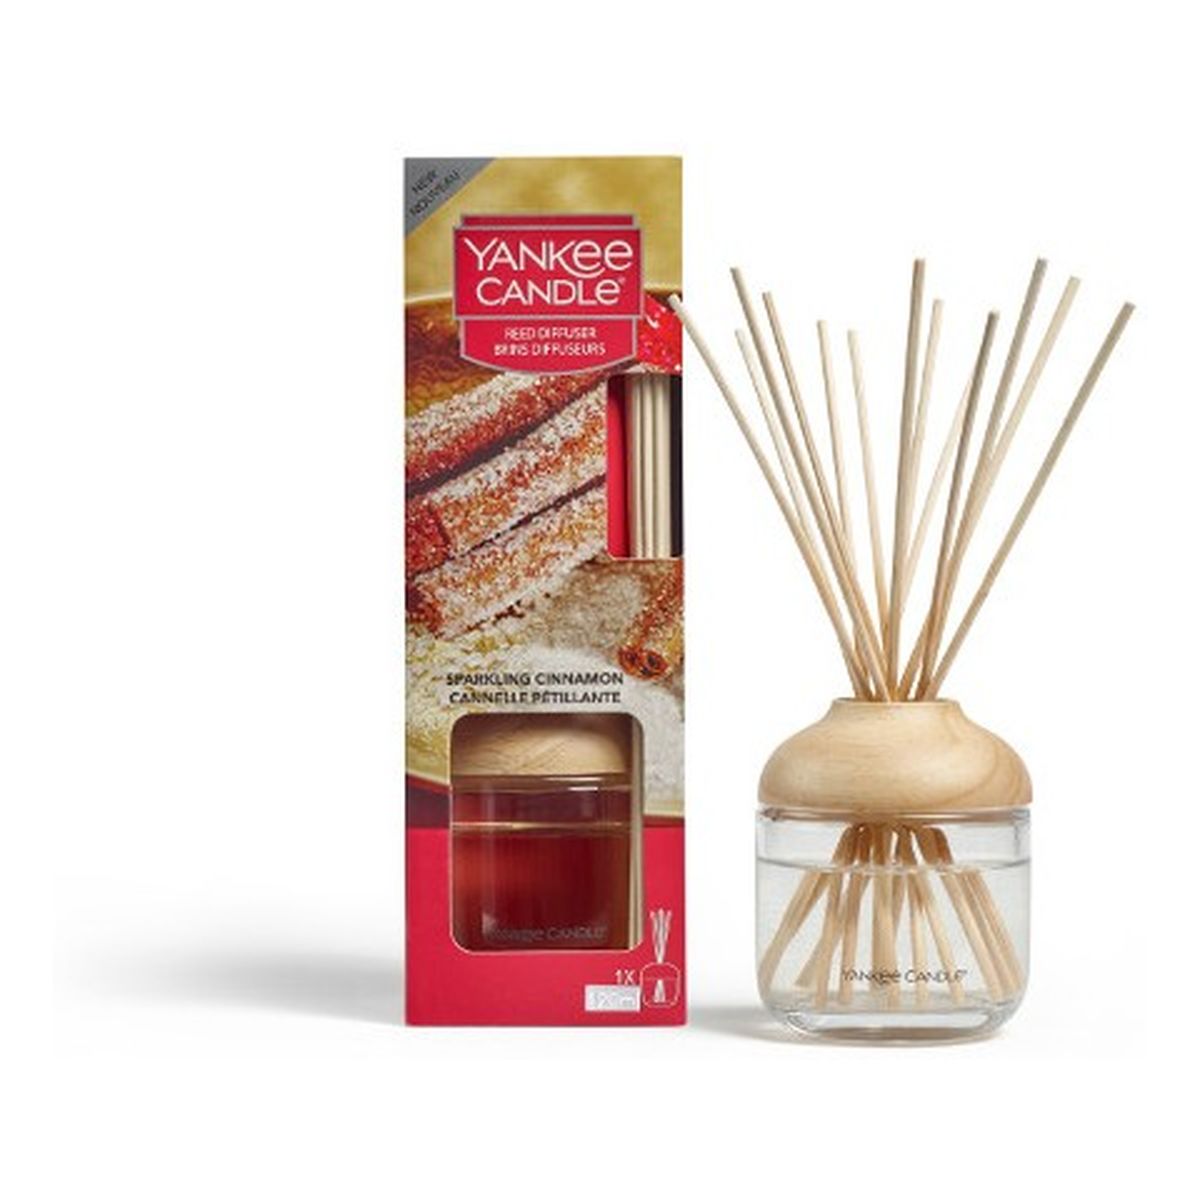 Yankee Candle Reed Diffuser pałeczki zapachowe Sparkling Cinnamon 120ml